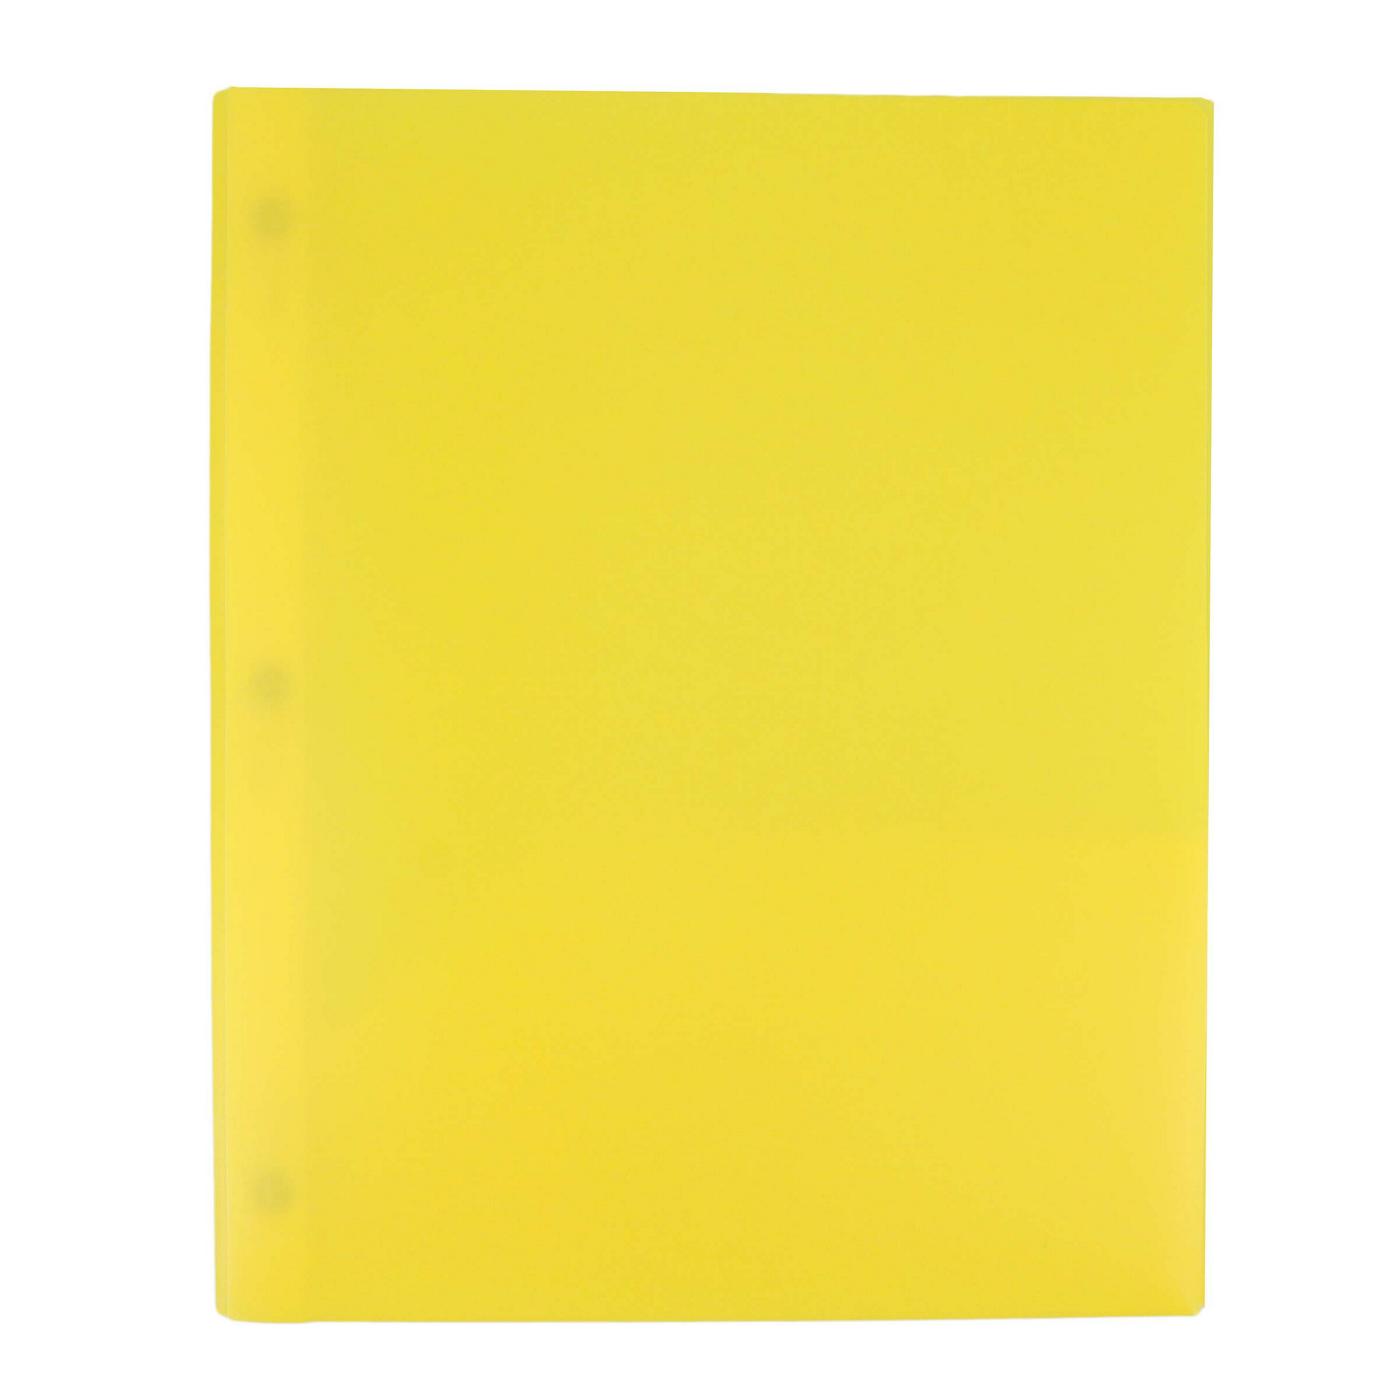 H-E-B Pocket Poly Folder with Prongs - Yellow; image 1 of 2